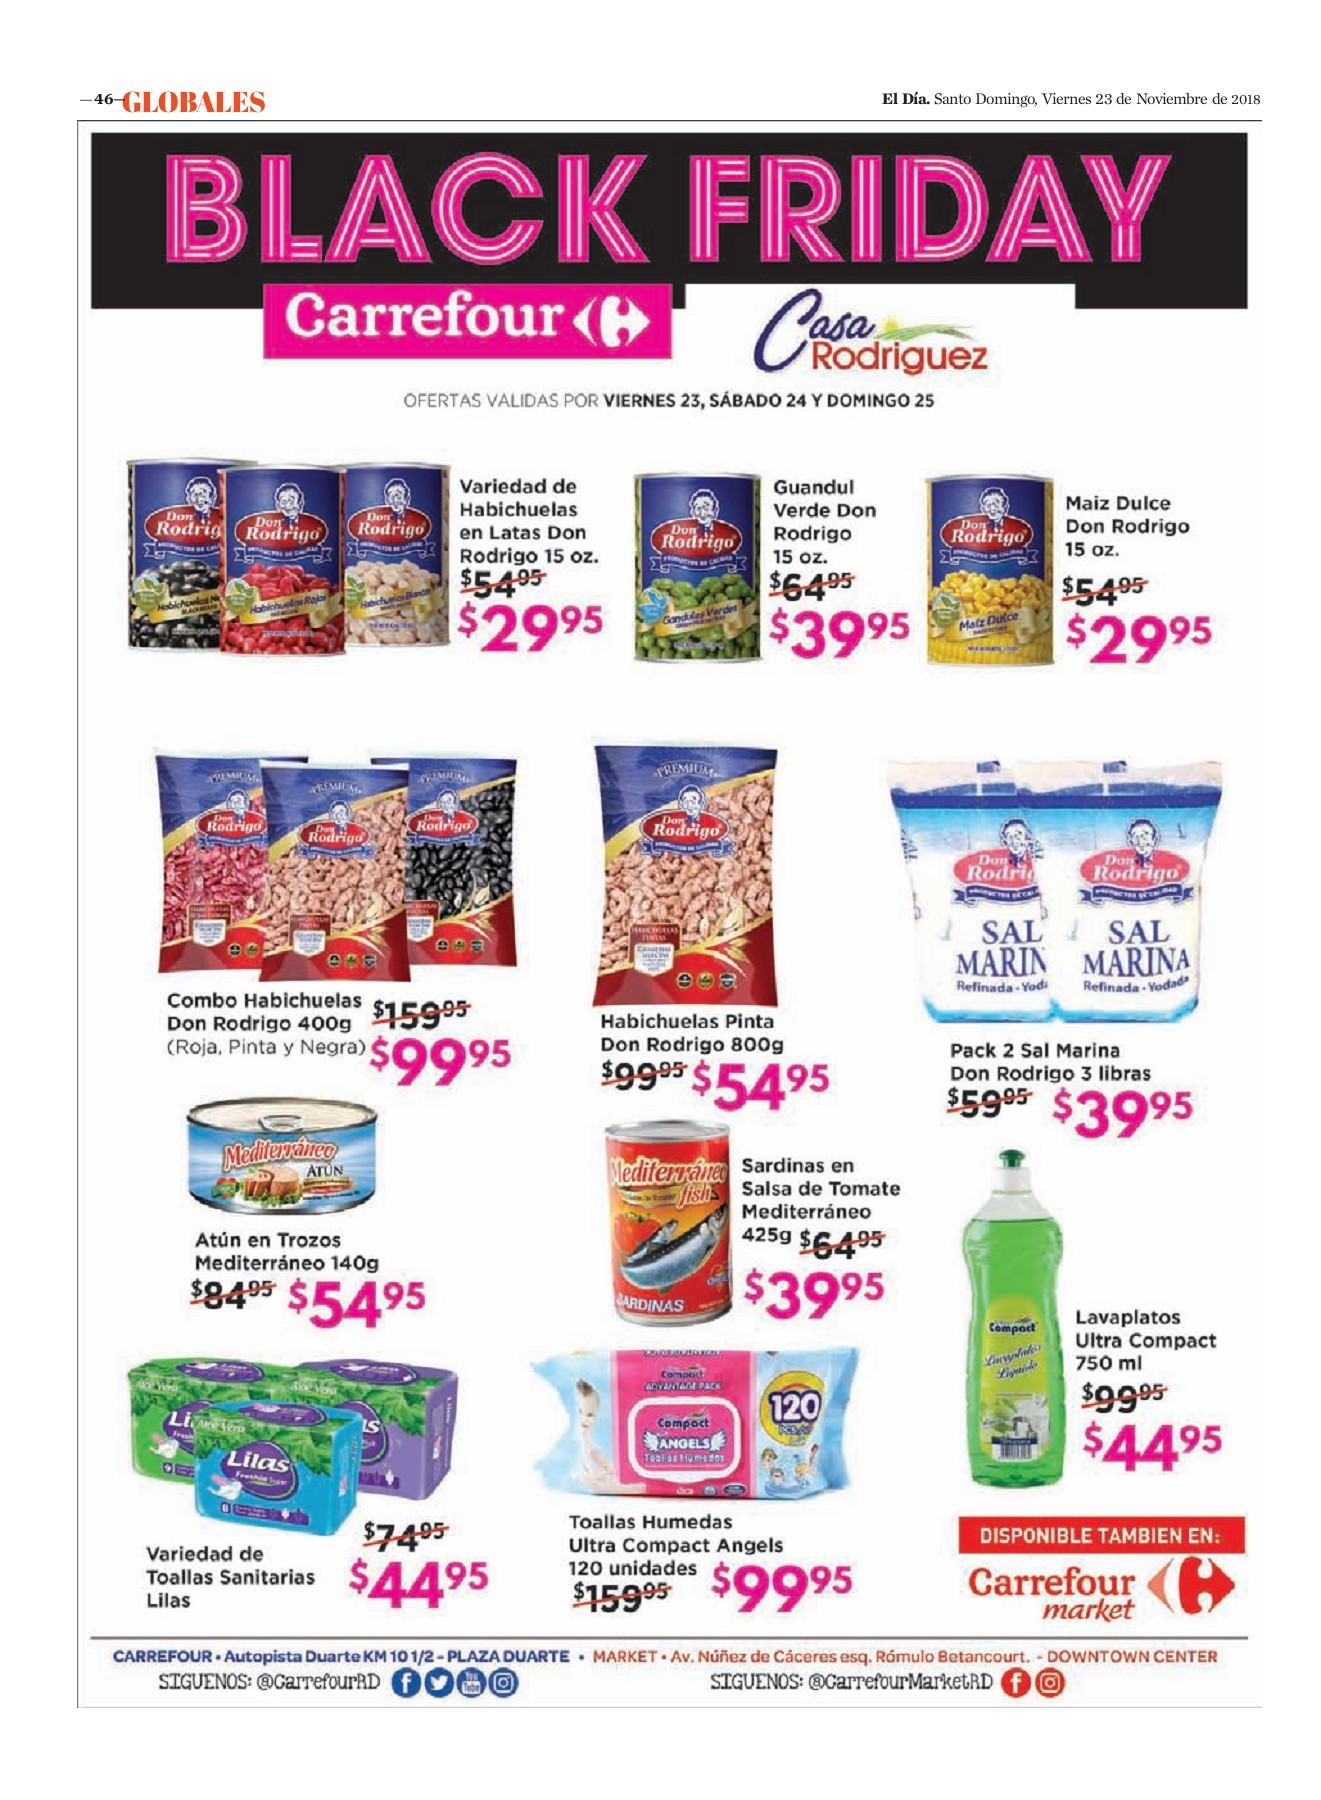 Encarte Carrefour 3, Viernes 23 de Noviembre 2018